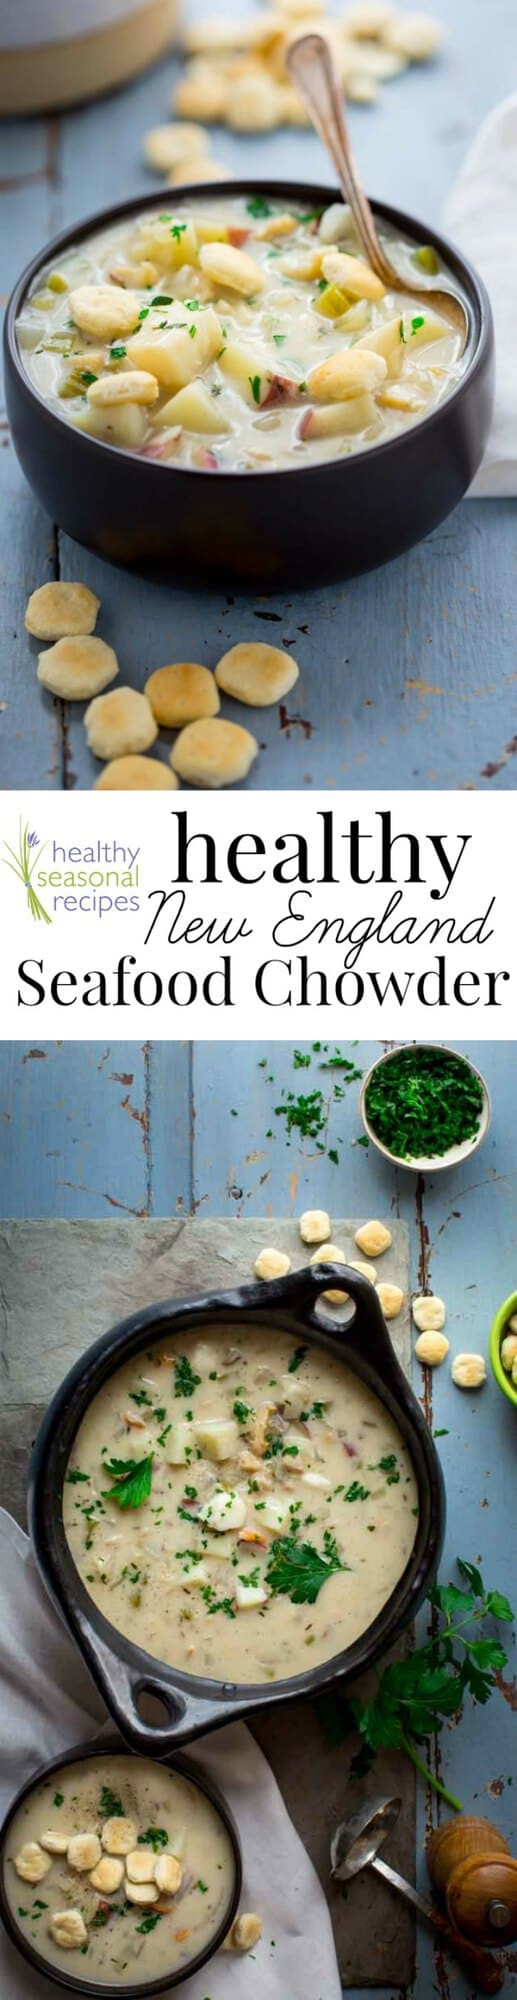 New England Seafood Chowder
 healthy new england seafood chowder Healthy Seasonal Recipes